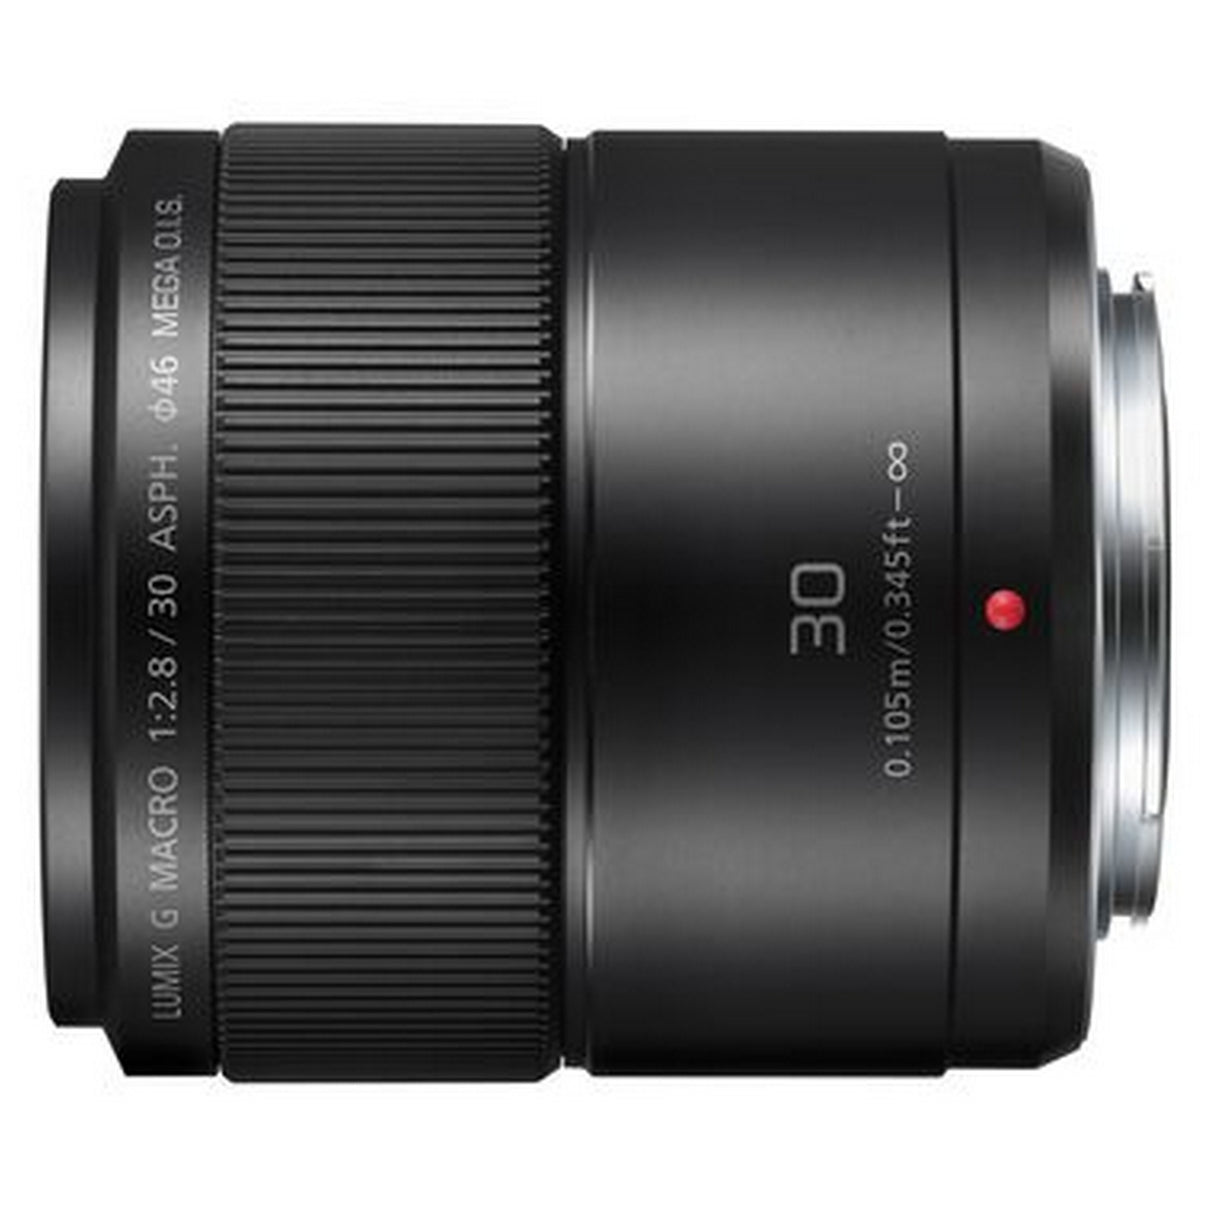 Panasonic LUMIX H-HS030 G Macro Lens, 30mm, F2.8 ASPH. Lens